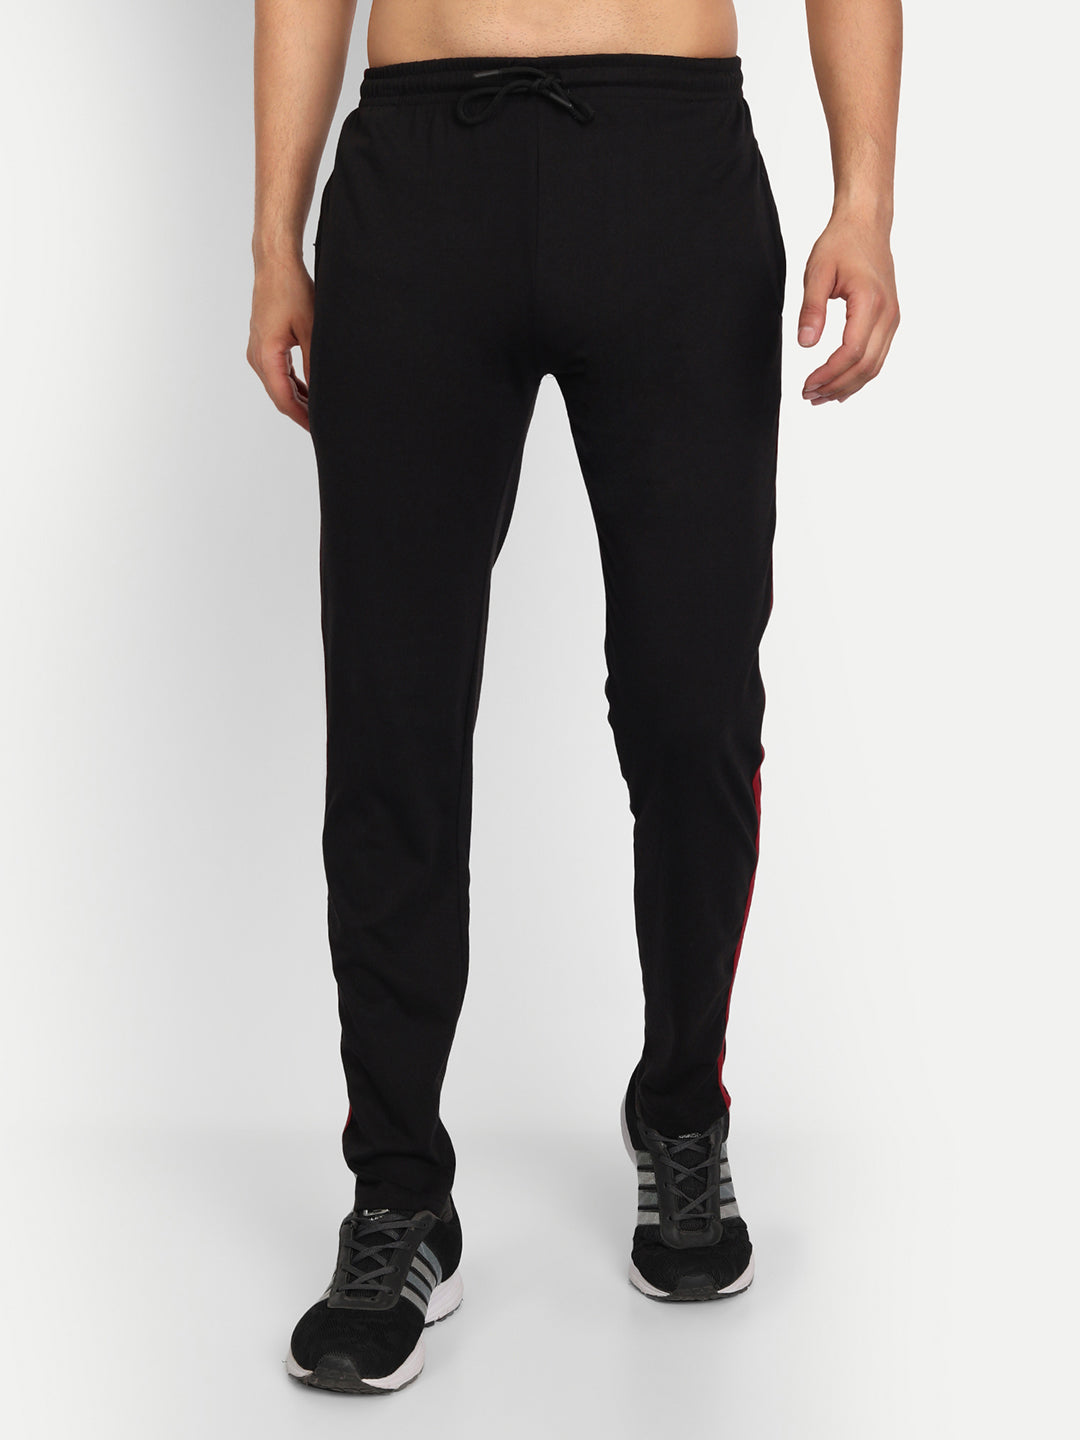 Adidas Track Black Windbreaker Pants Men's Size XL Drawstring Side Pocket